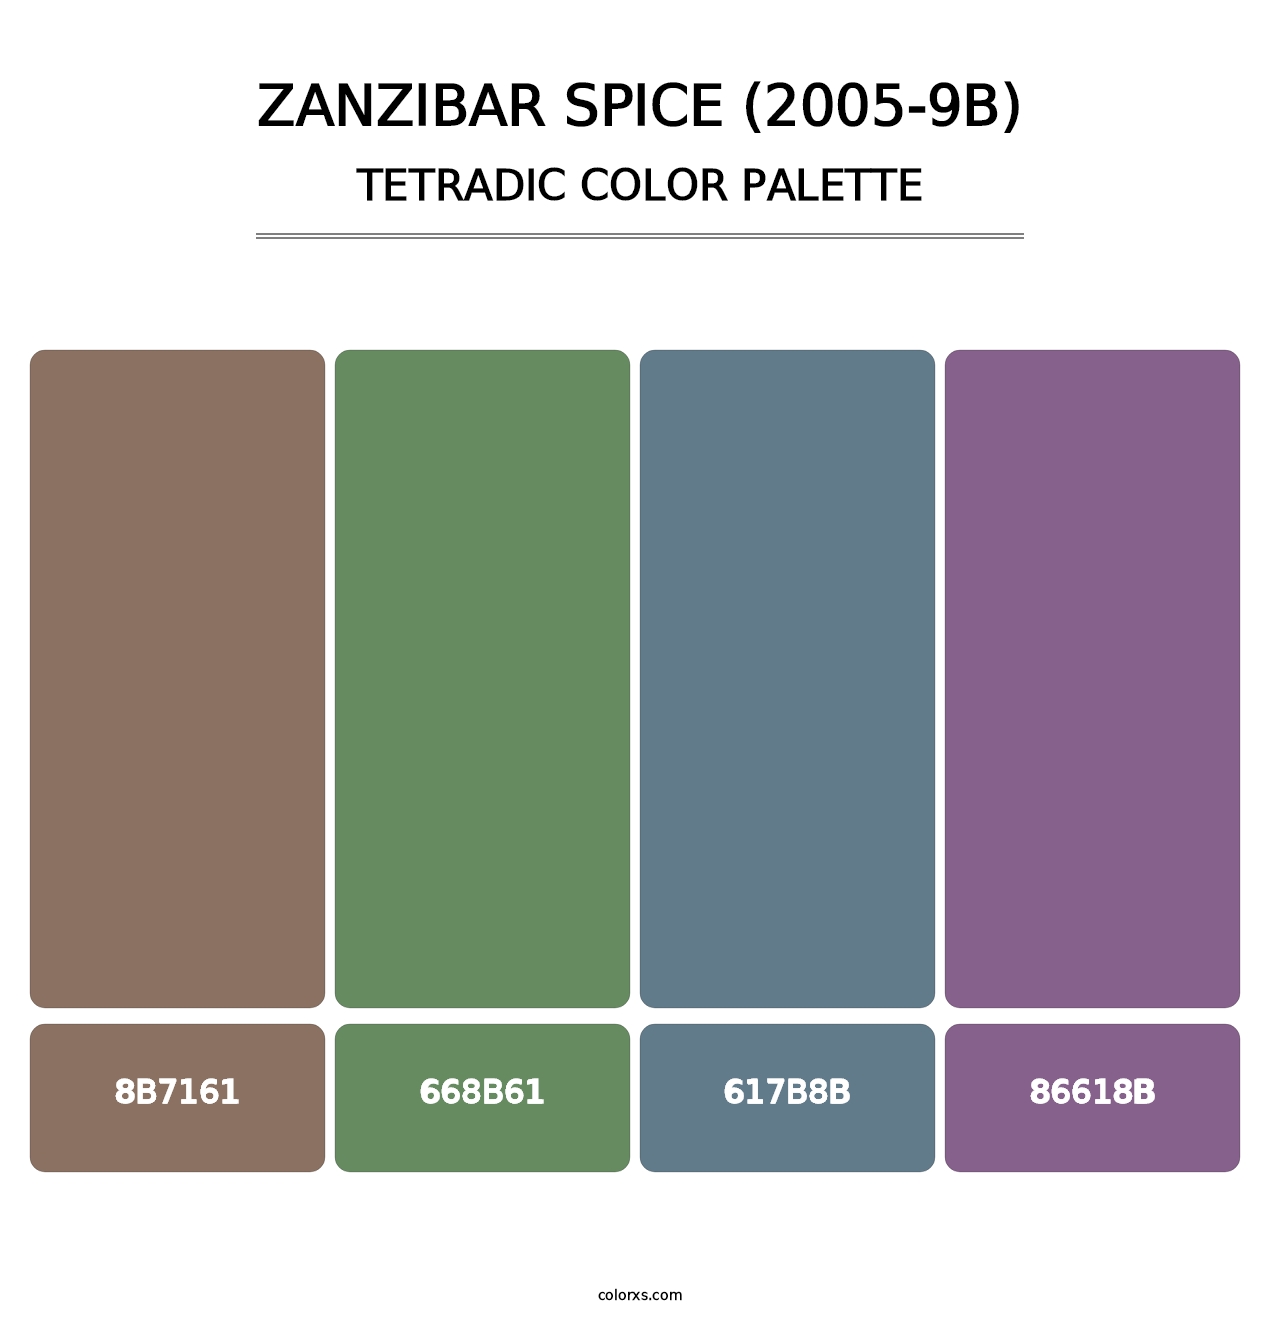 Zanzibar Spice (2005-9B) - Tetradic Color Palette